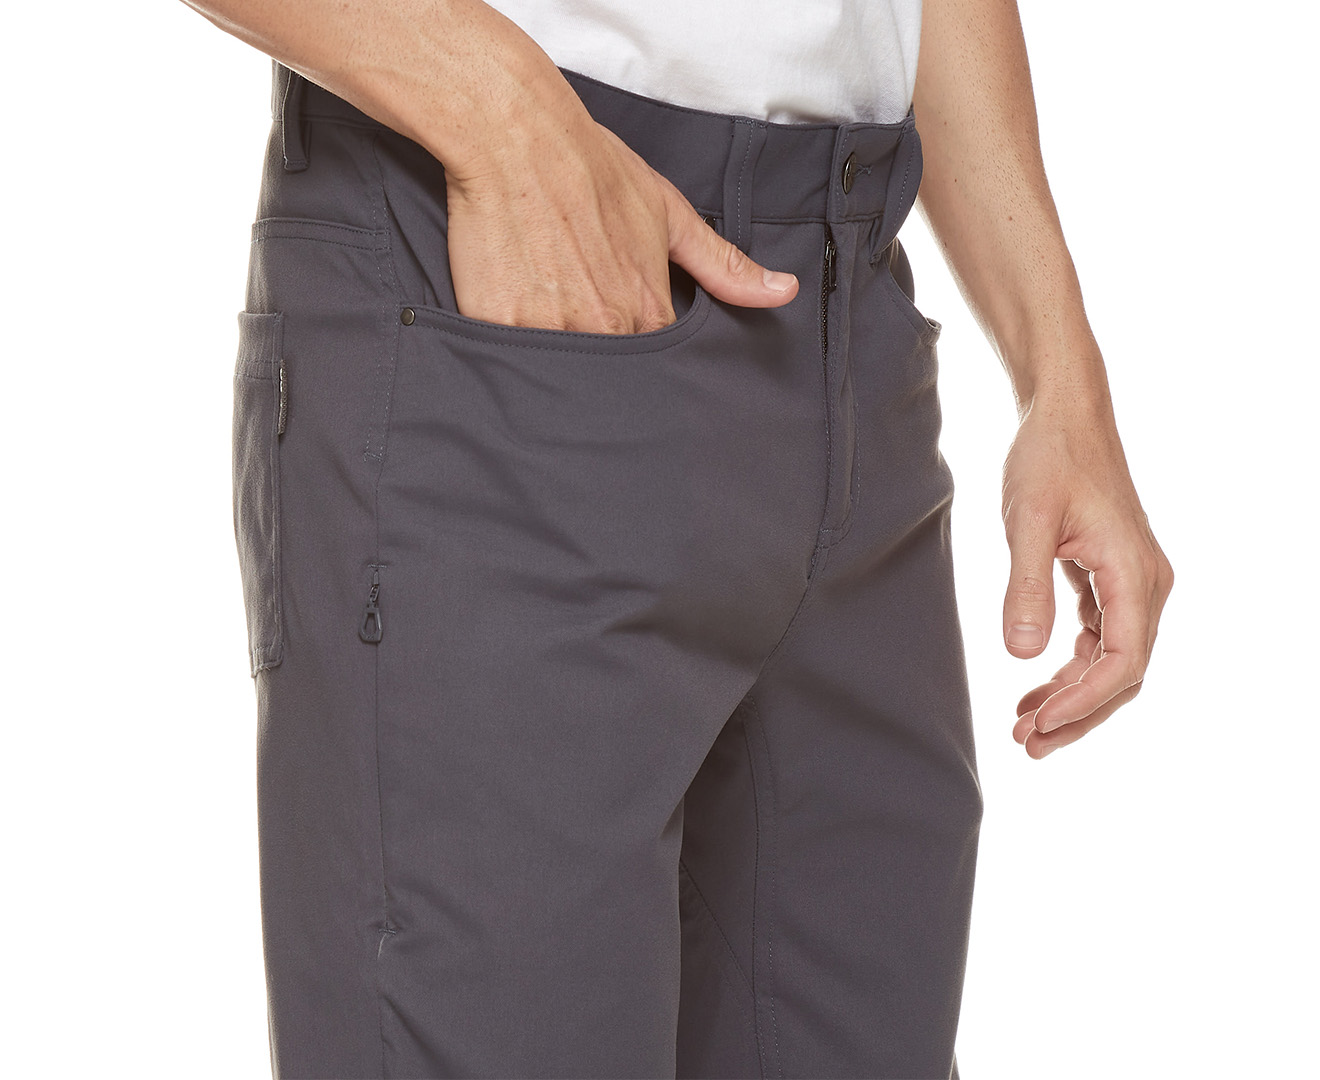 Men's Holmen 5 Pocket Outdoor Pants